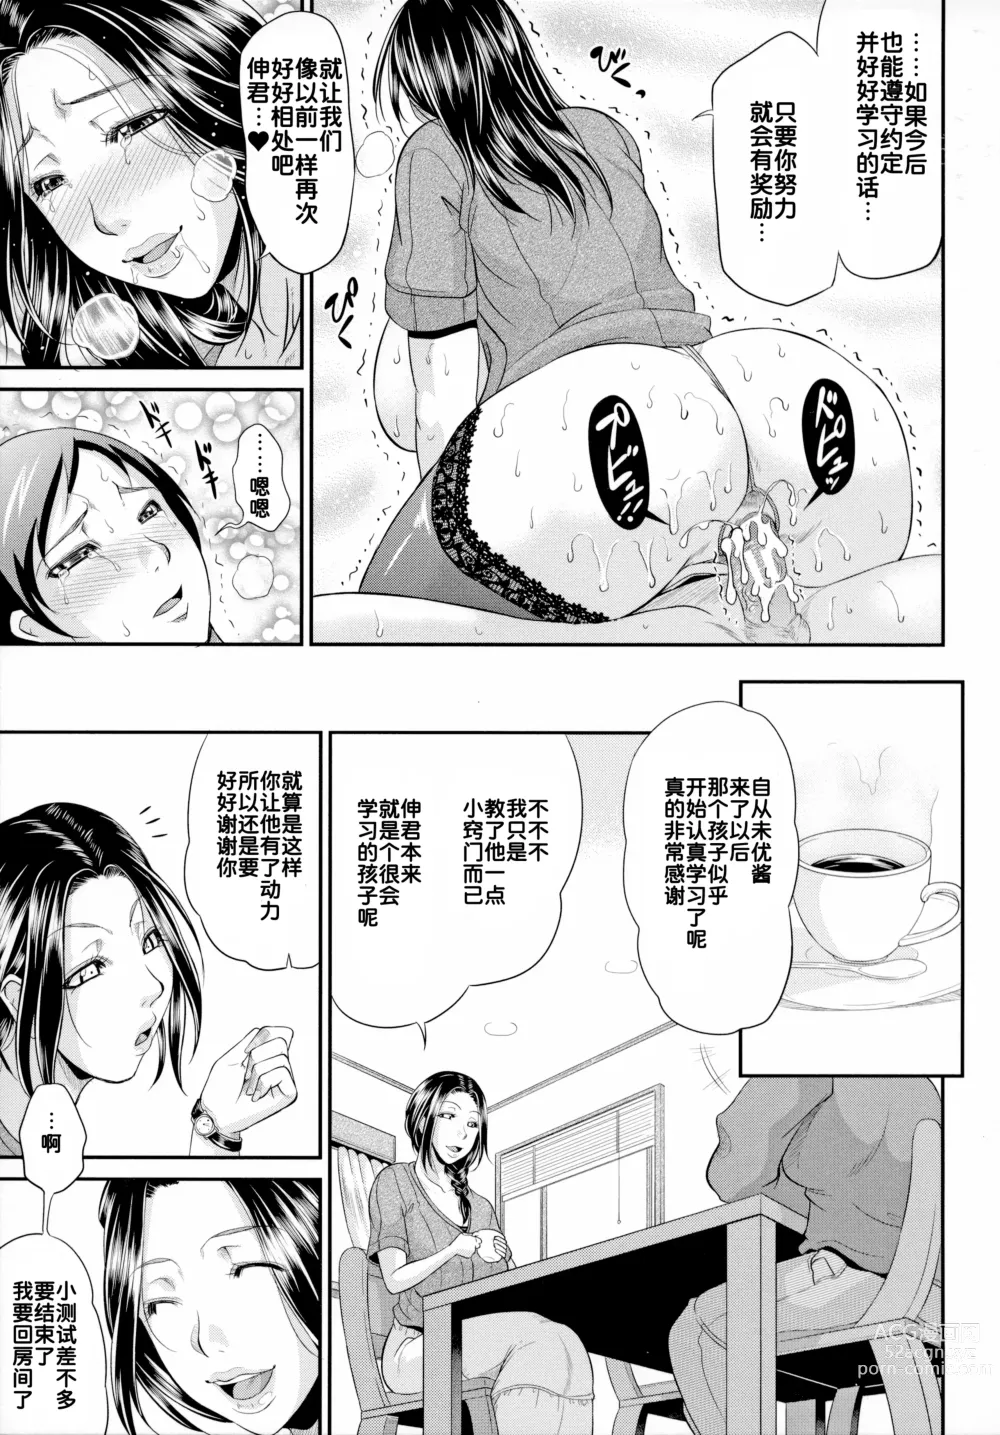 Page 196 of manga Uruwashi no Wife